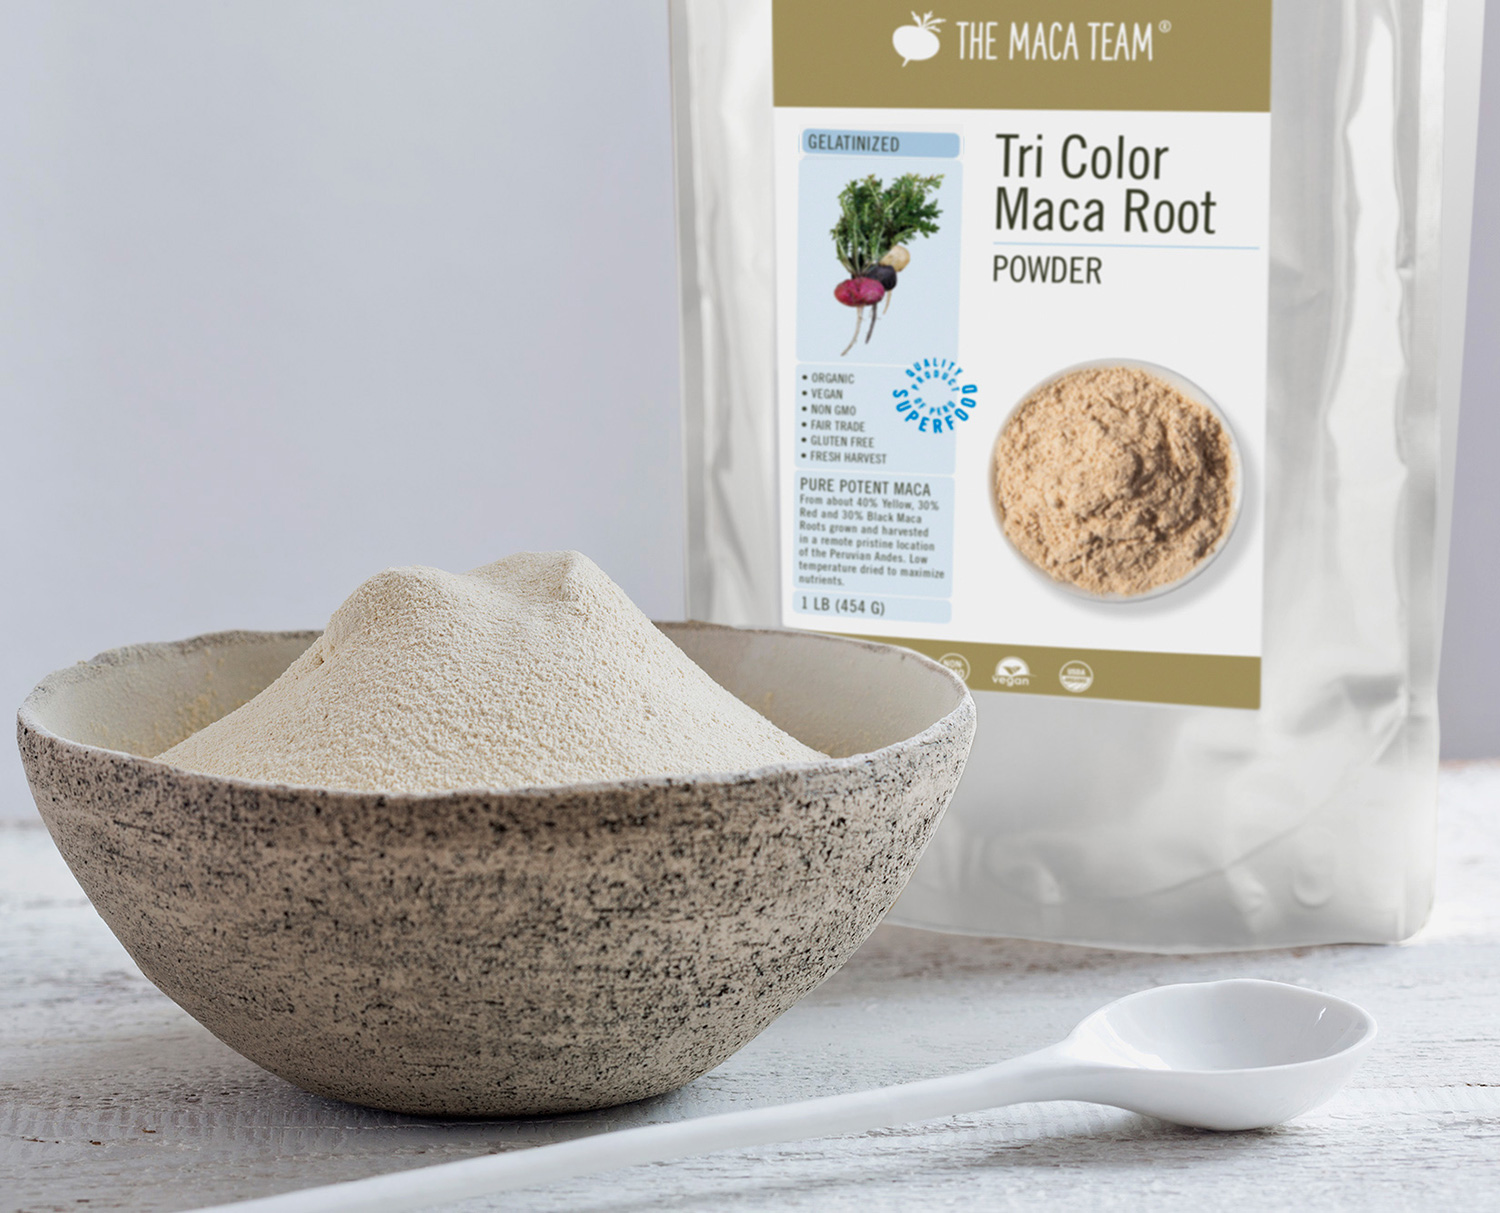 gelatinized tri-color maca powder from the maca team